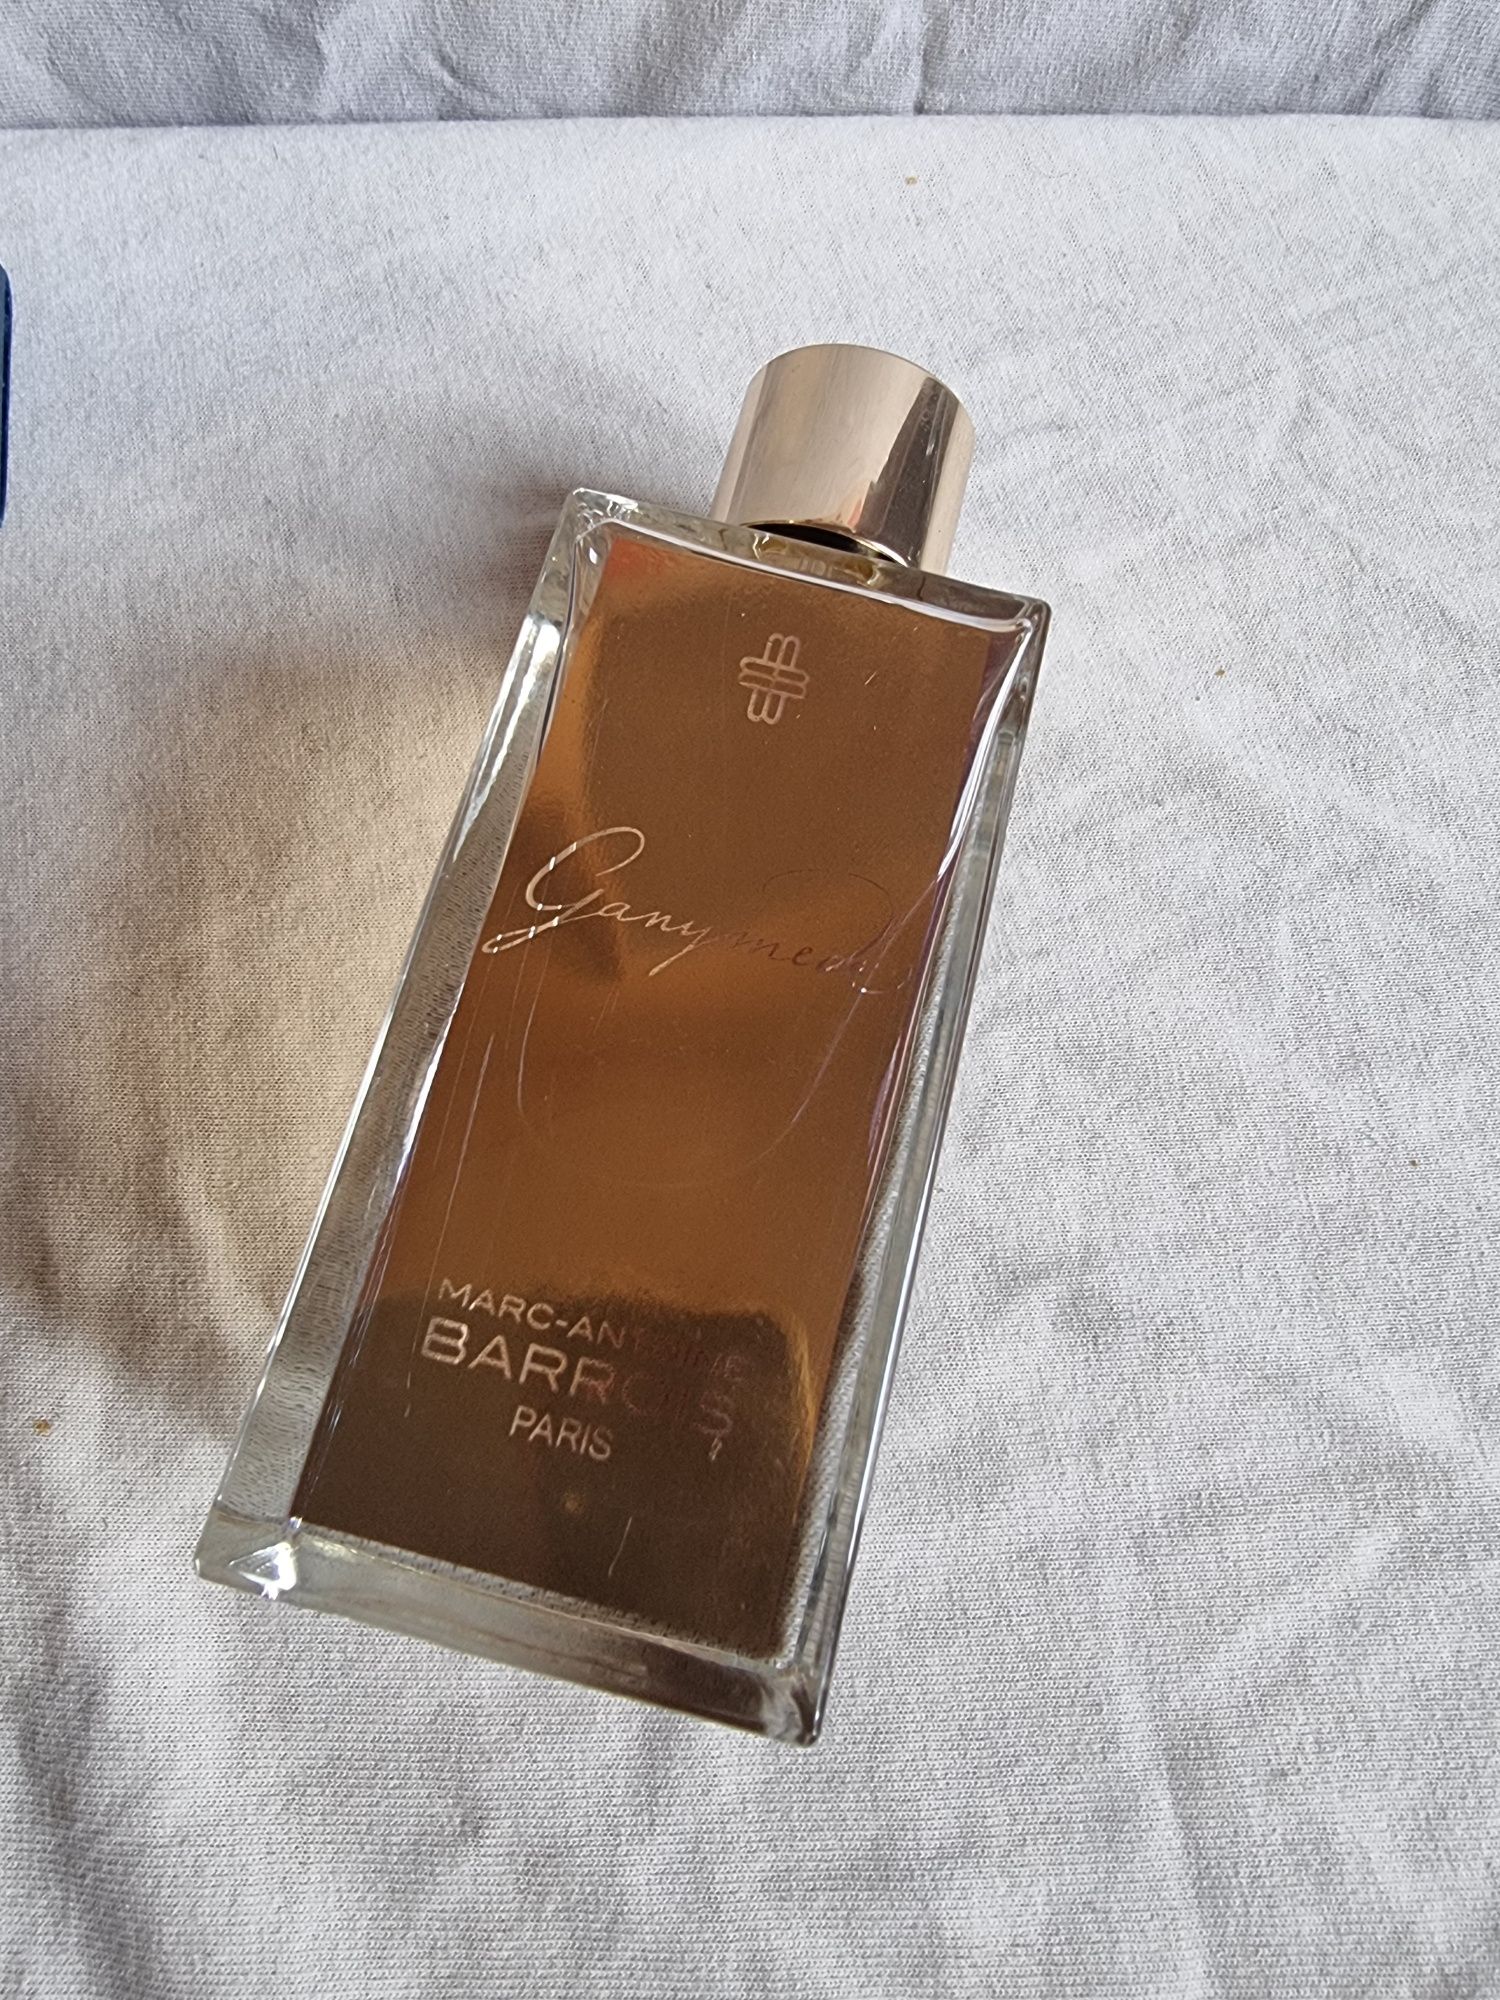 Marc-Antoine Barrois Ganymede- парфюмированая вода 100мл, оригинал.